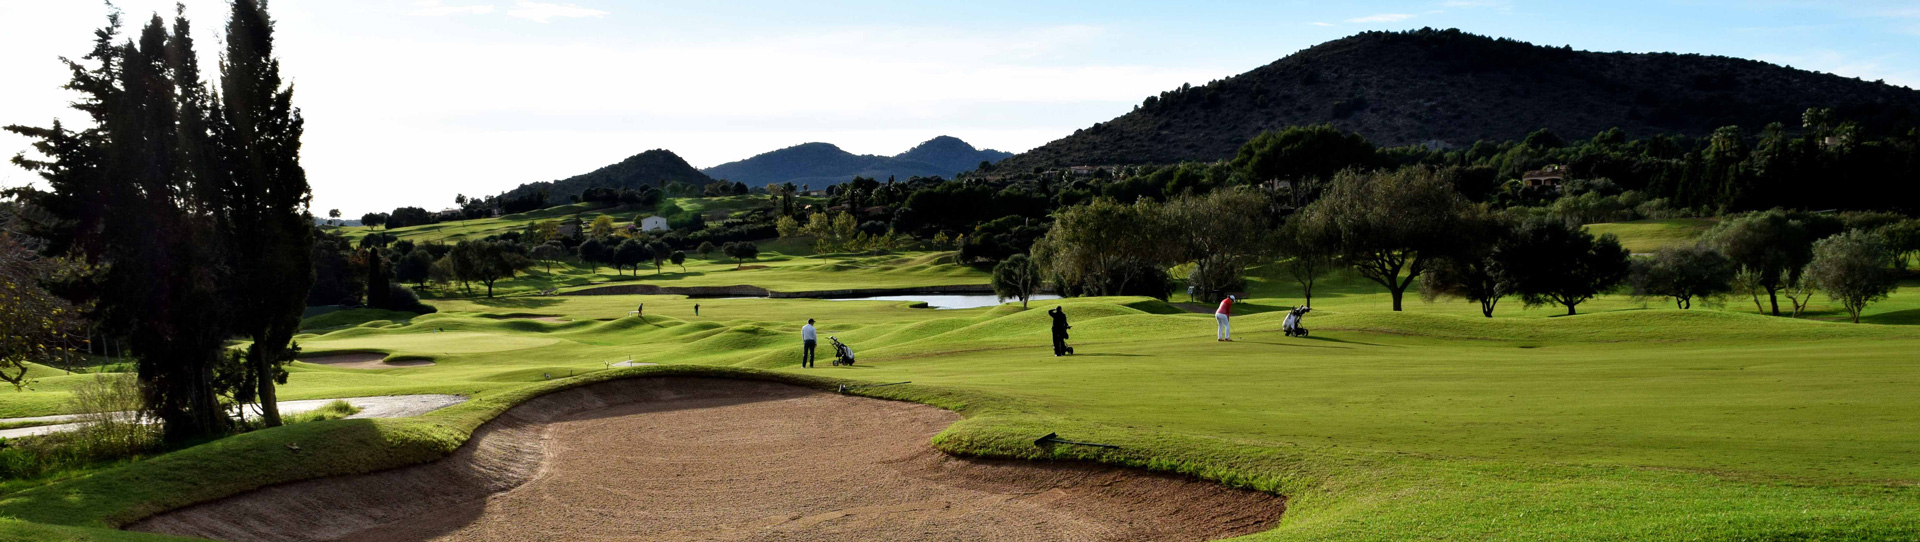 Spain golf courses - Pula Golf Course - Photo 2